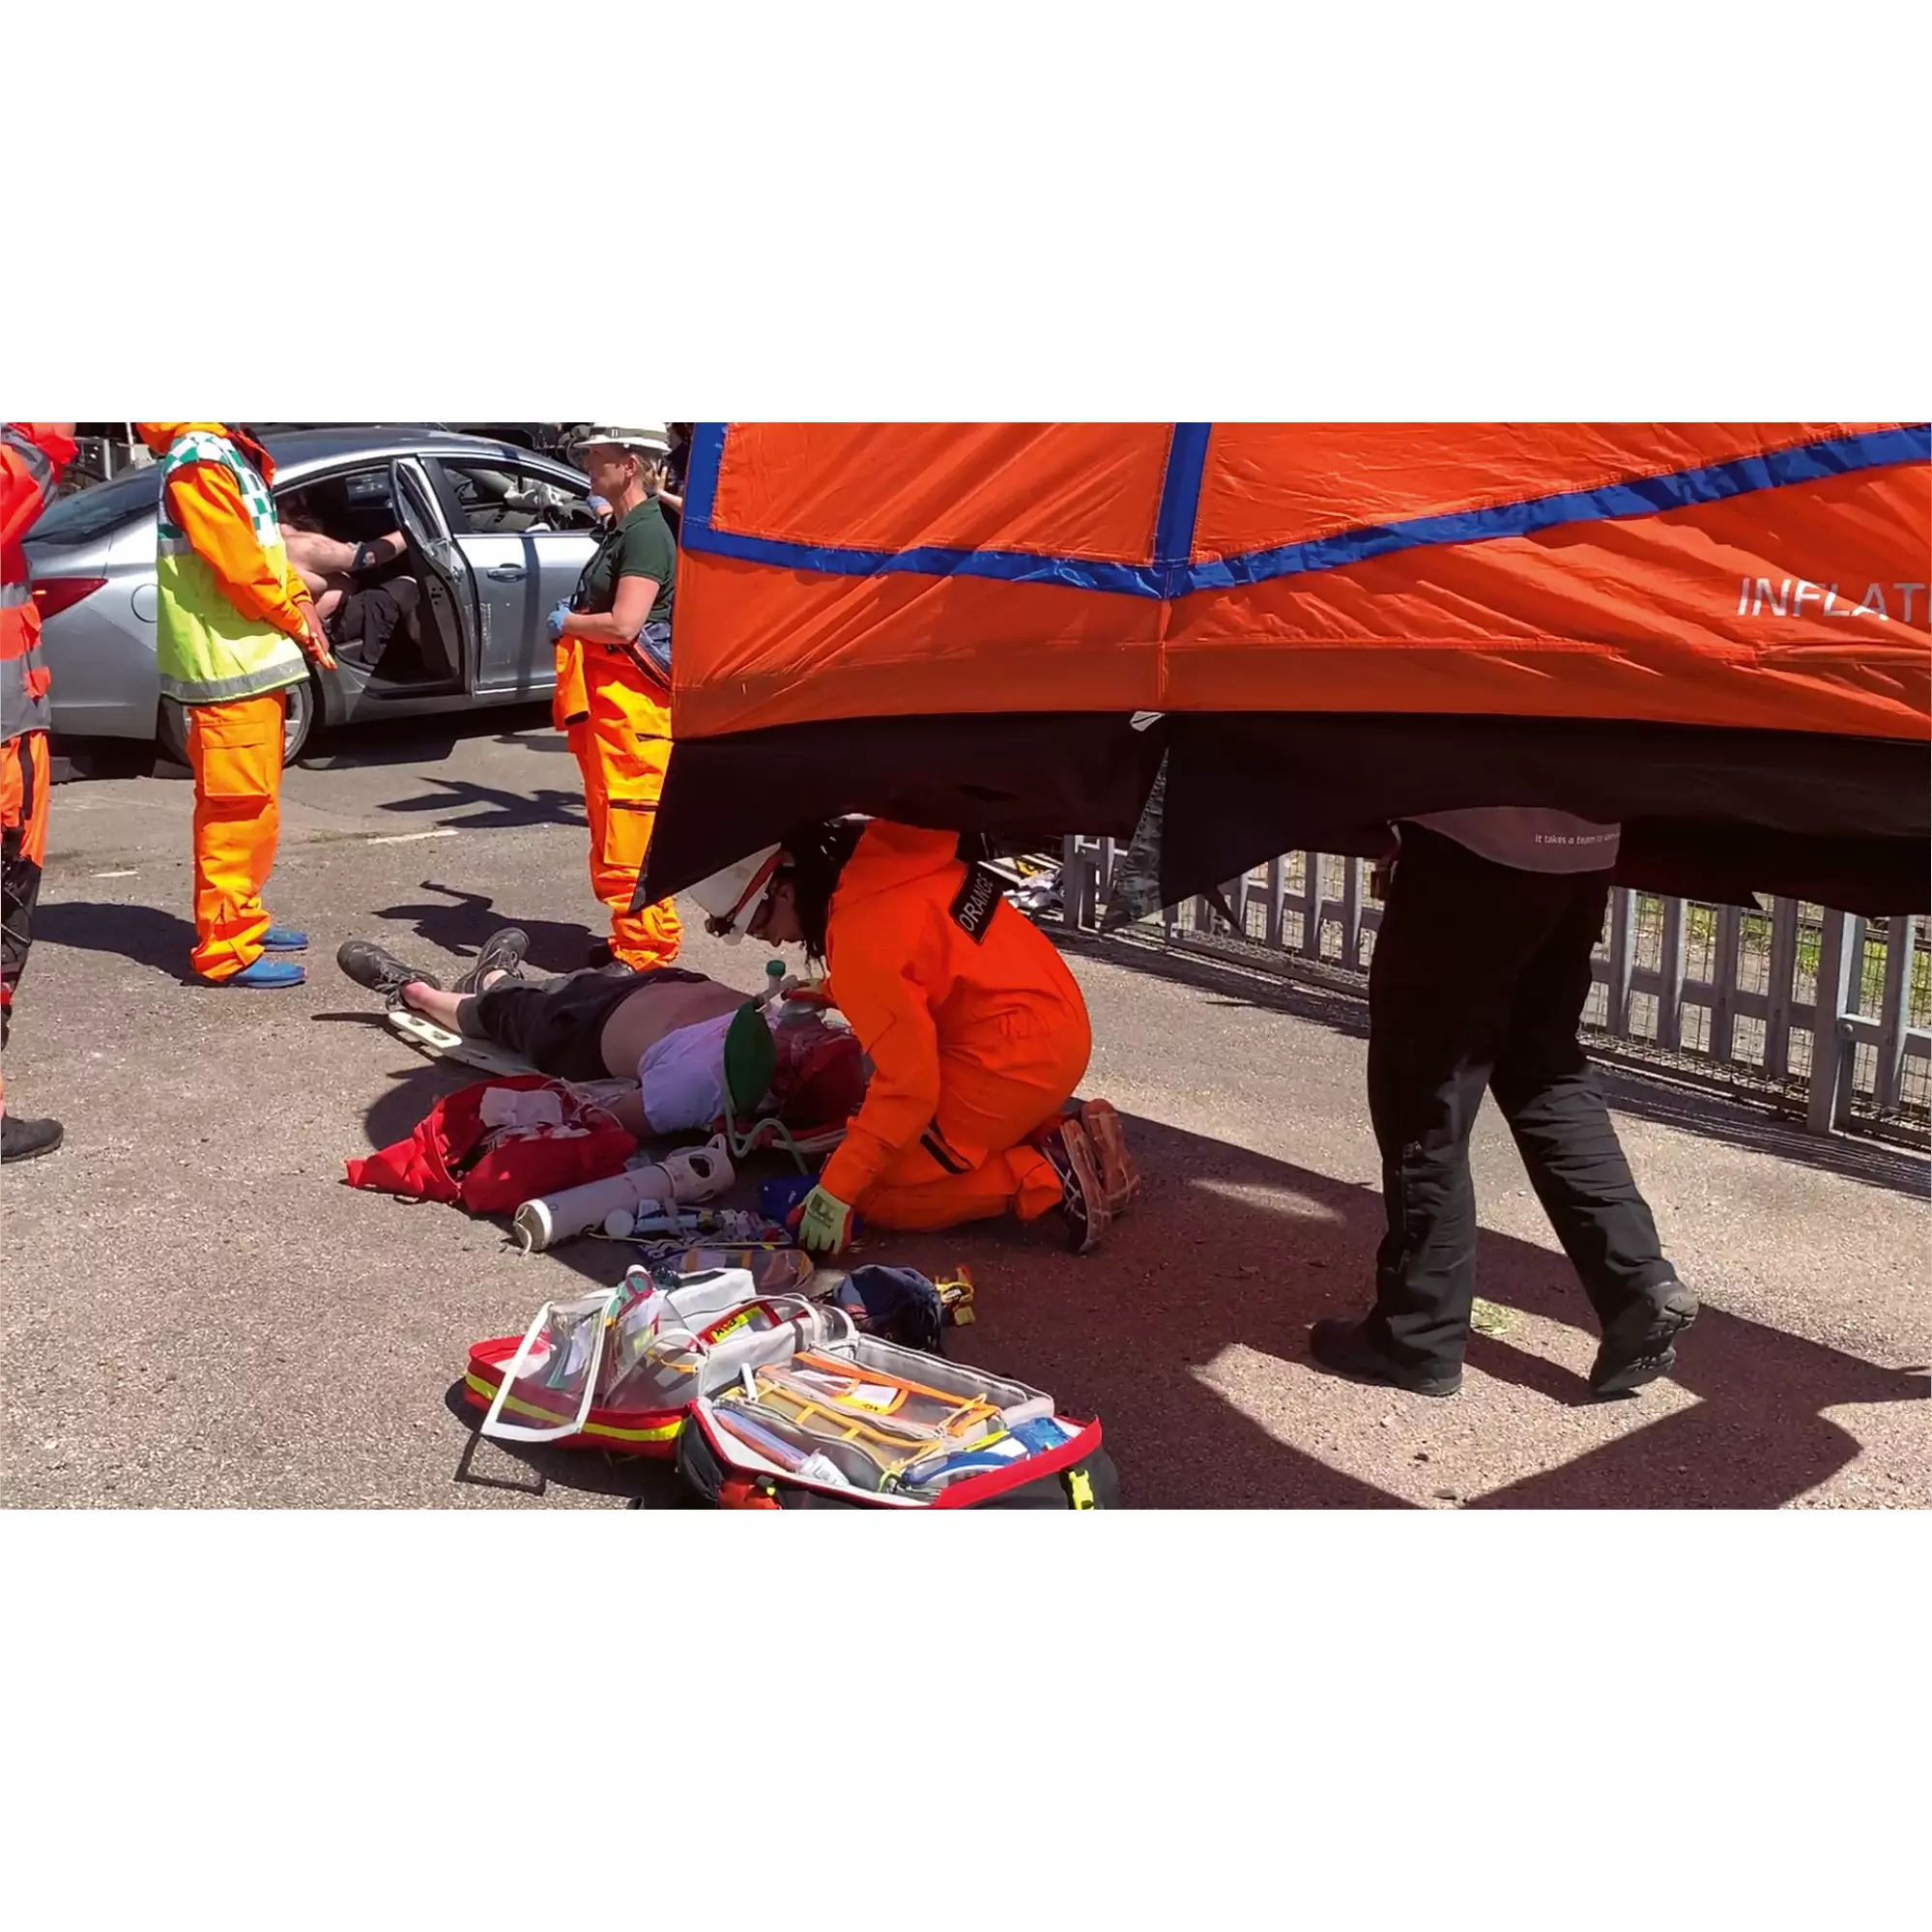 RIGLOO Rescuer rescue tent